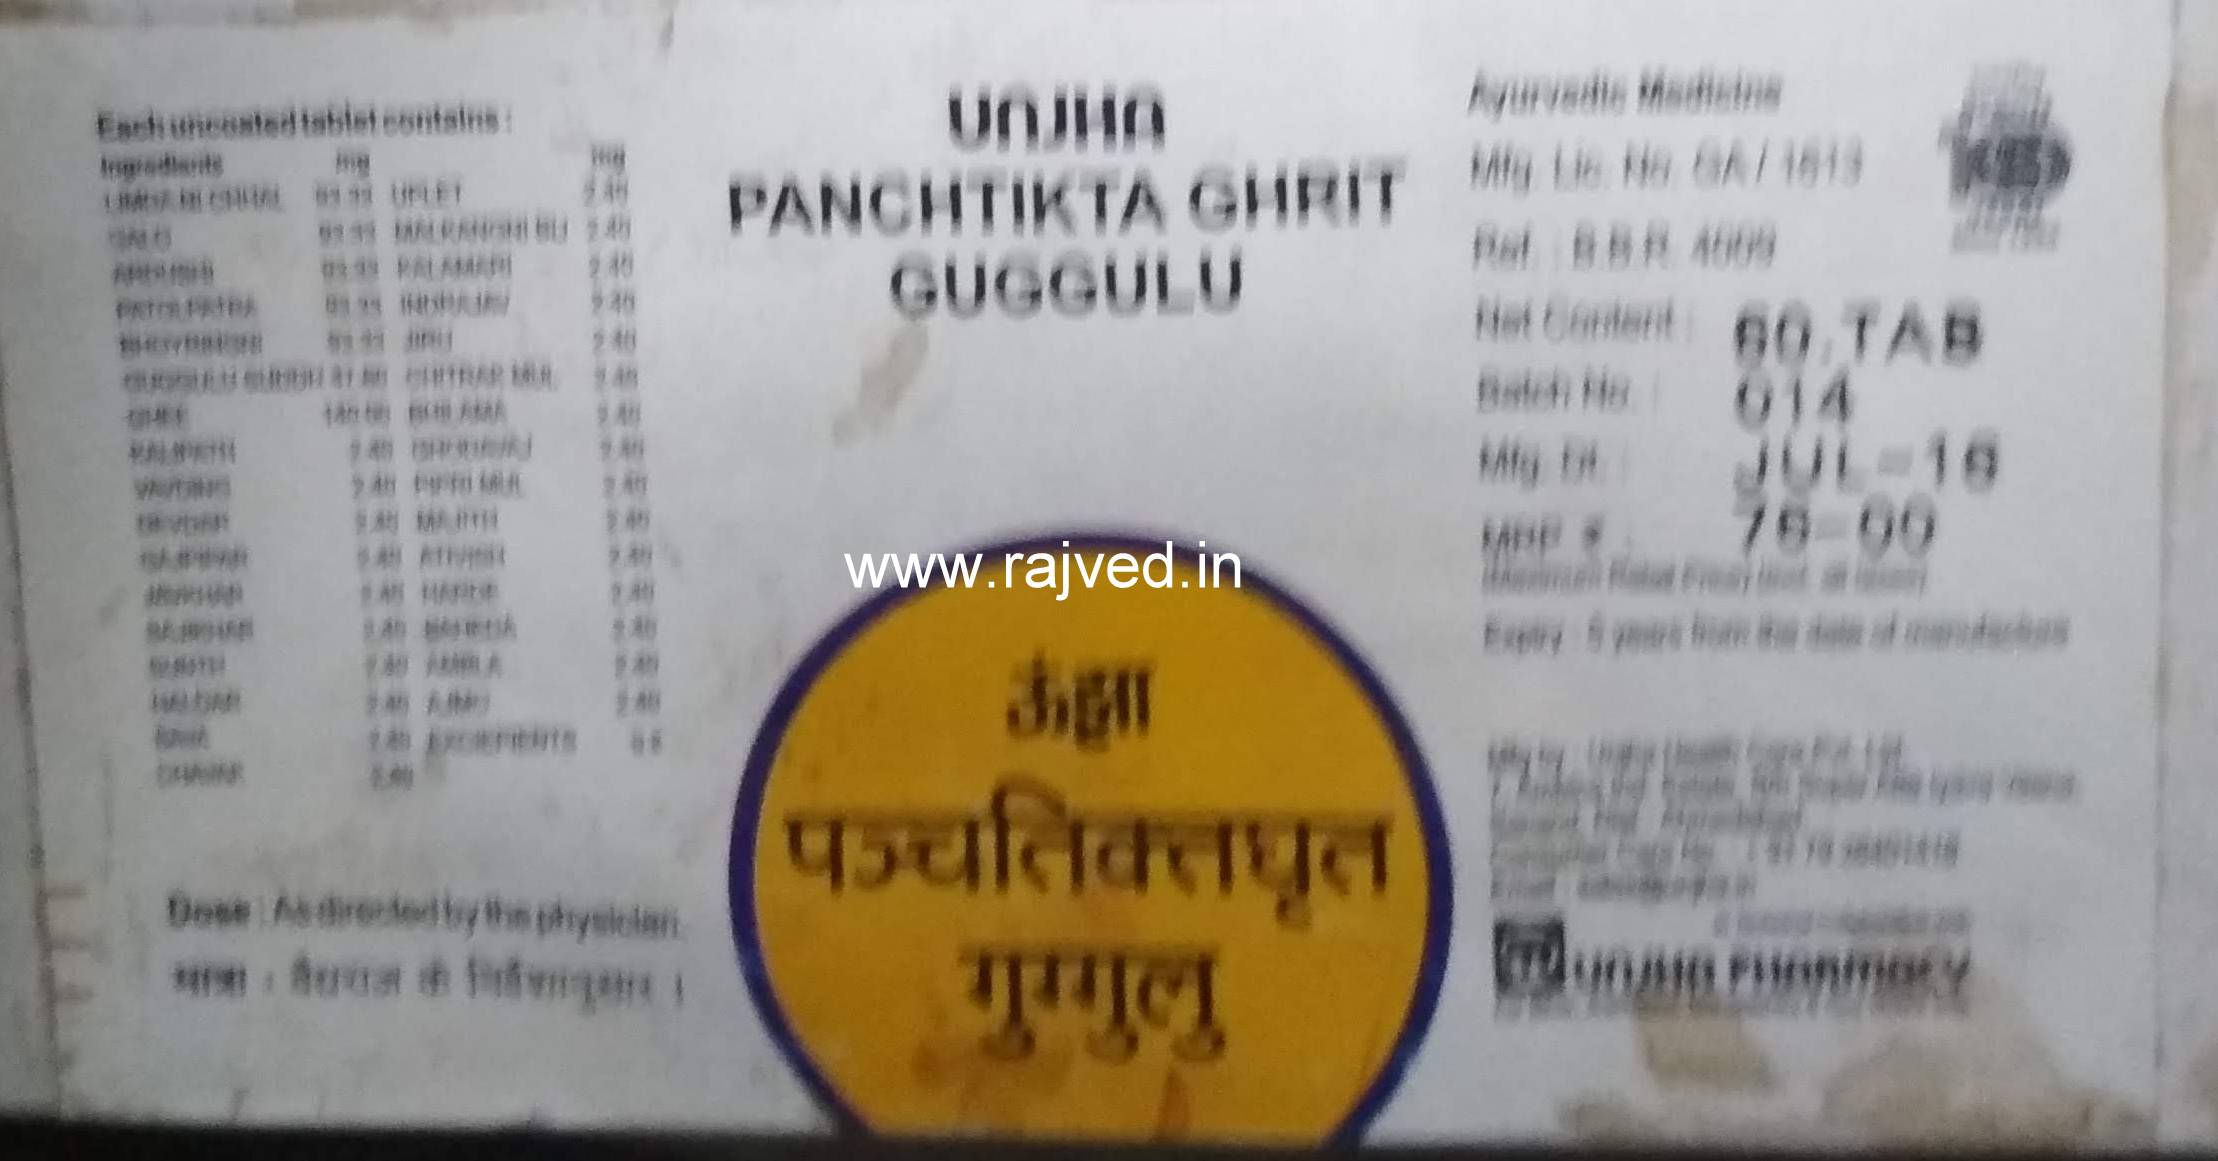 panchatikta ghrit guggulu 60 tab the unjha pharmacy